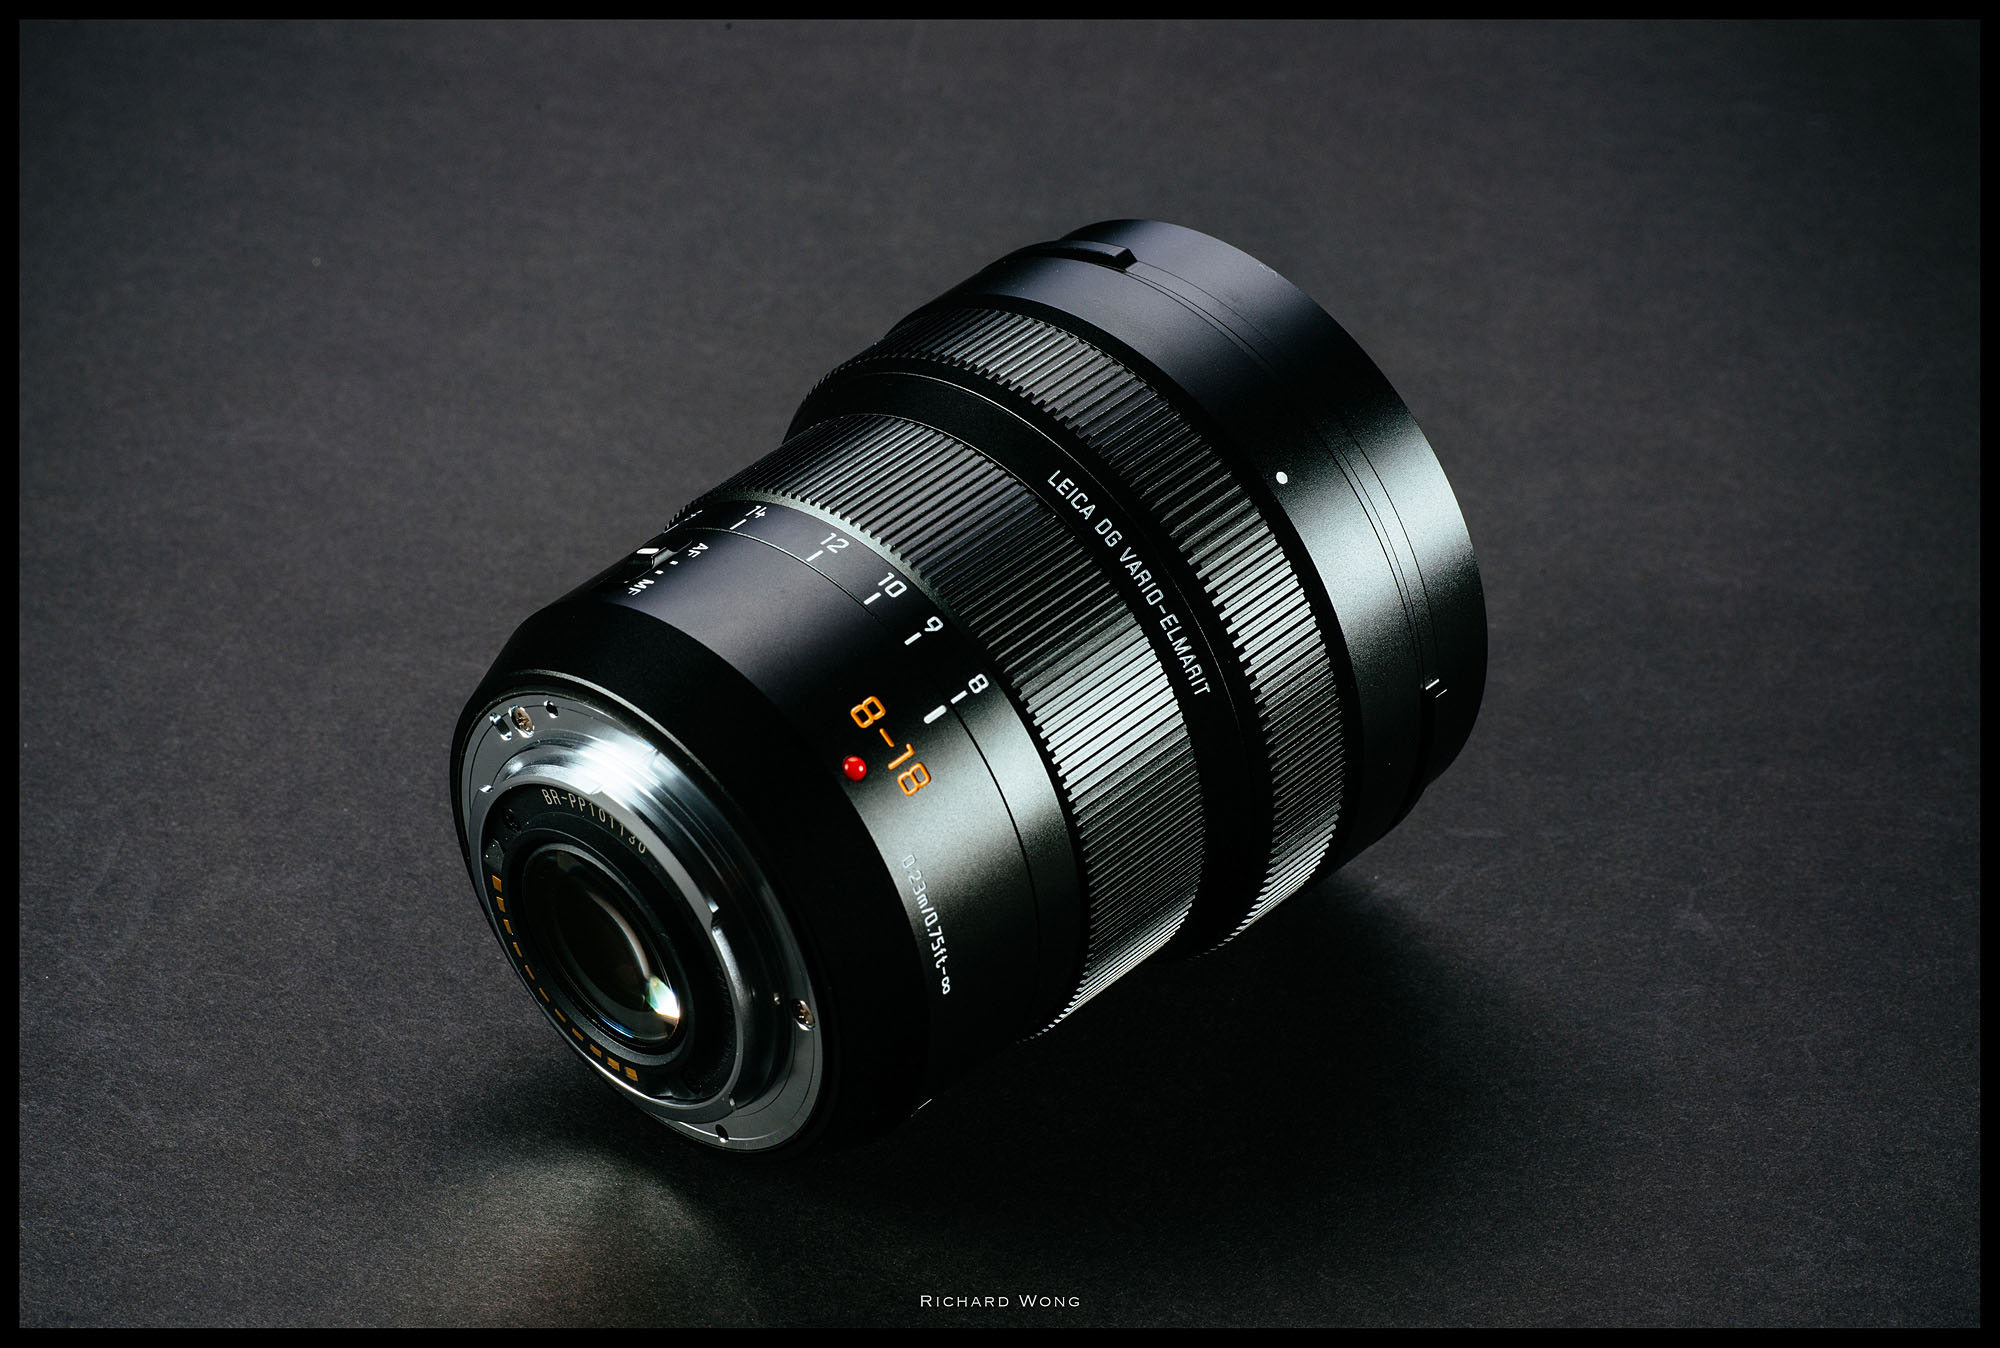 LEICA DG VARIO-ELMARIT 8-18mm f/2.8-4.0 ASPH Review – Review By